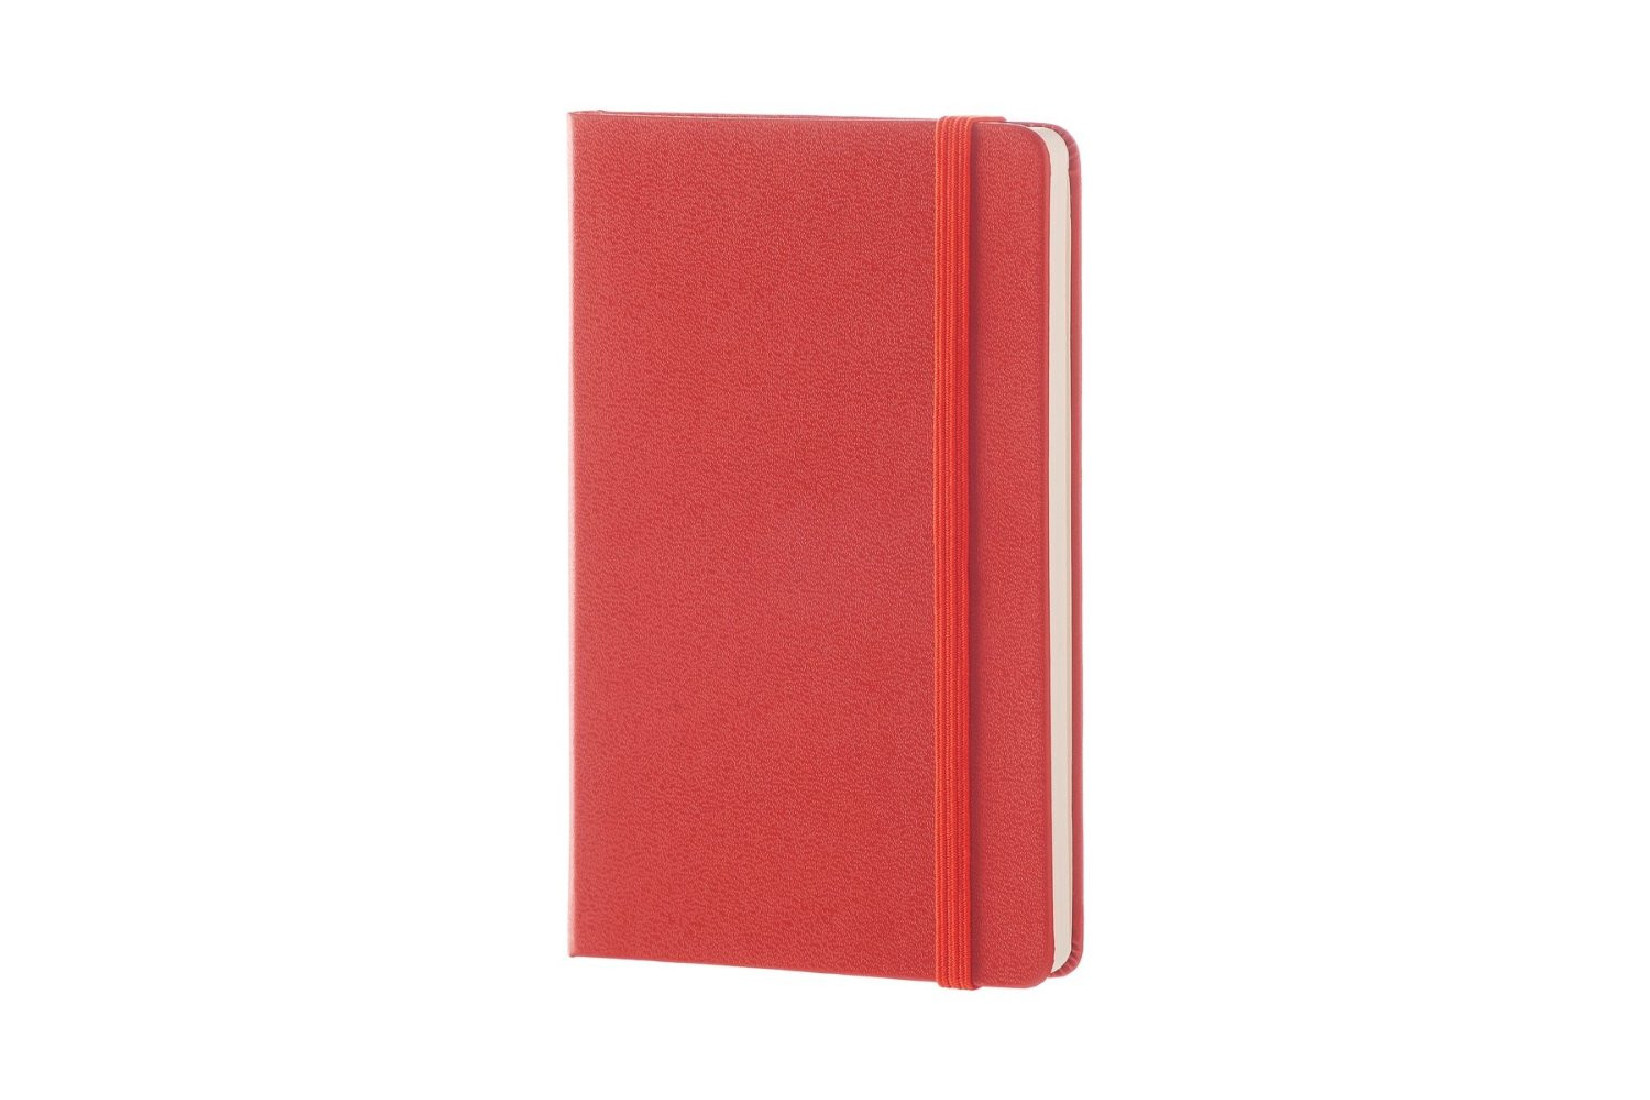 Notebook Pocket 9x14 Ruled Coral Orange Hard Cover Moleskine